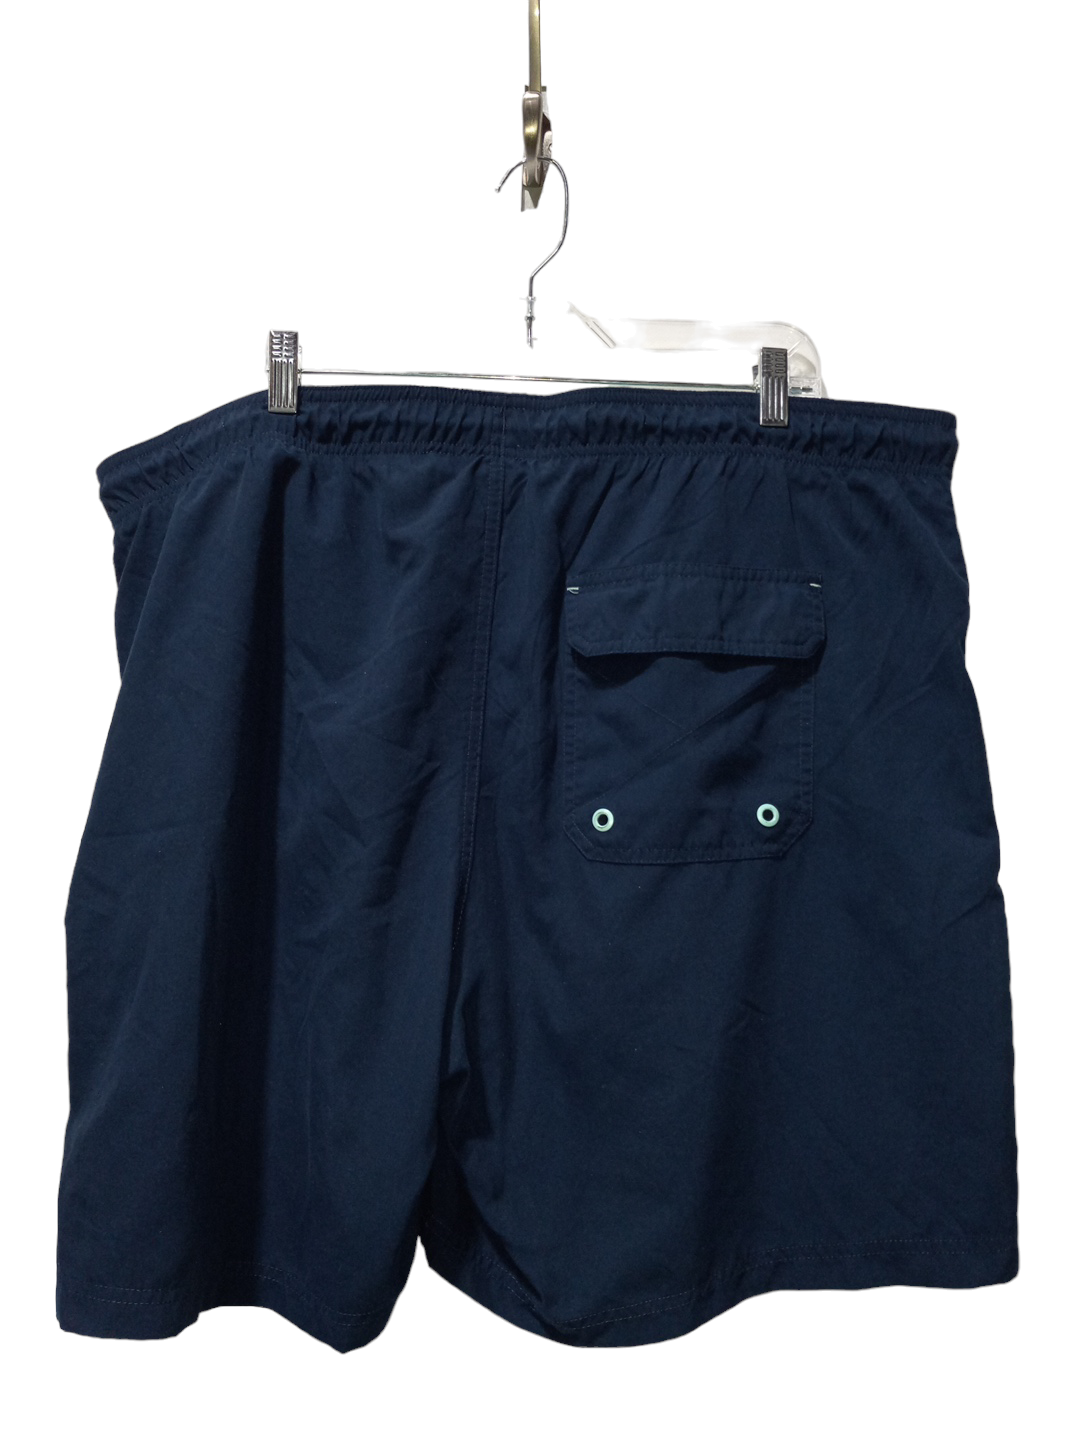 Navy Athletic Shorts George, Size 2x